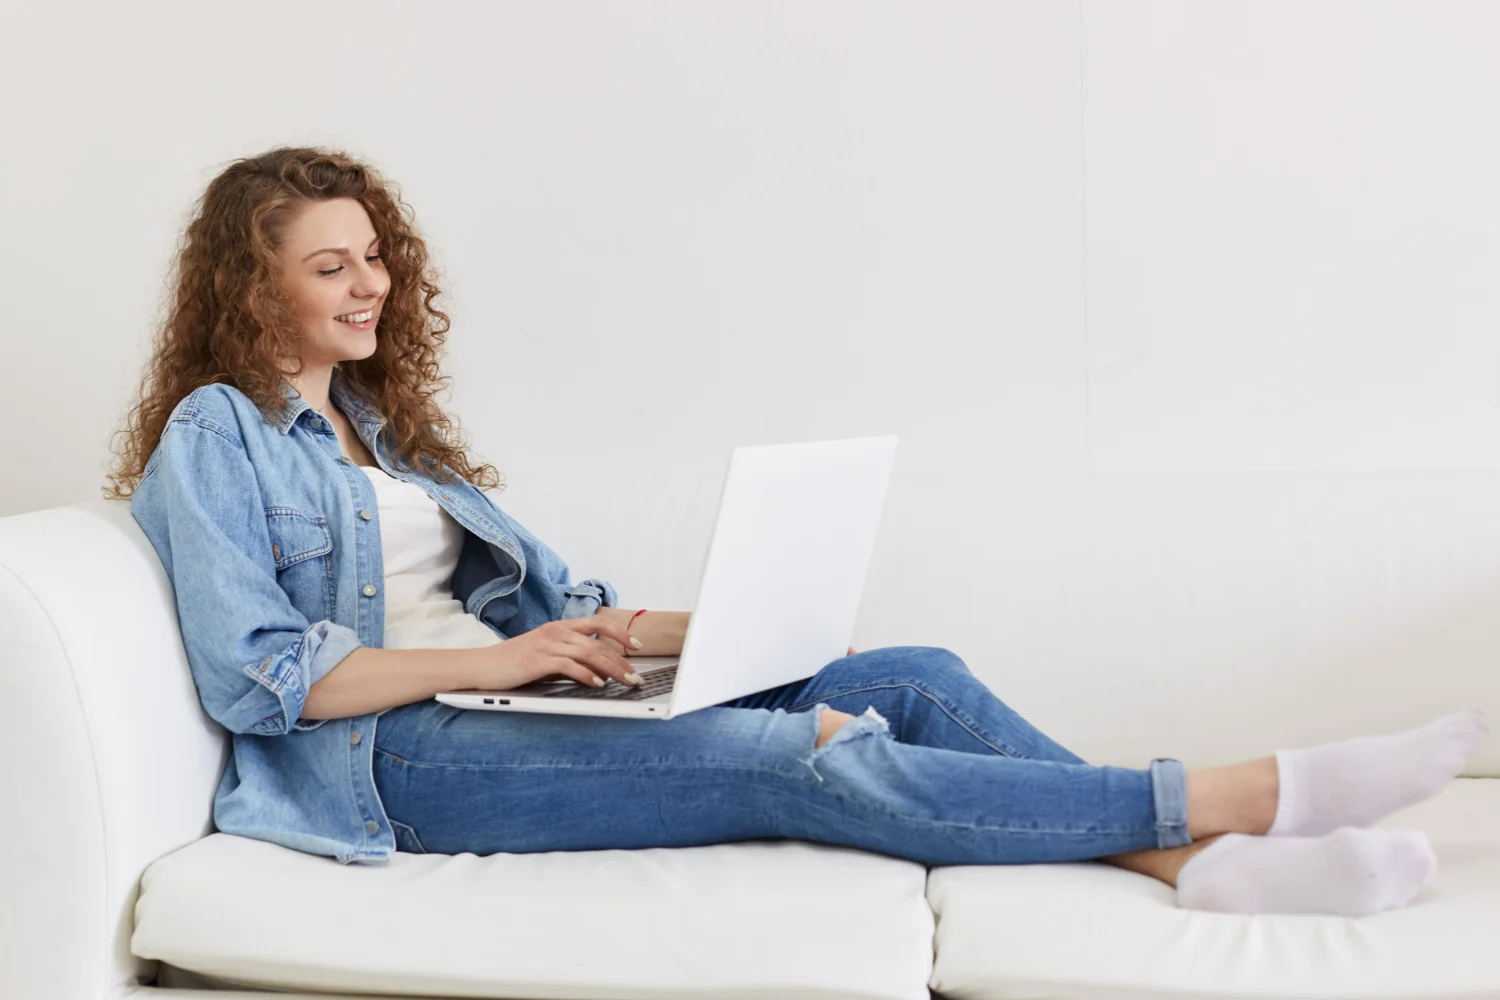 Mulher feliz comprando roupas online usando provador virtual